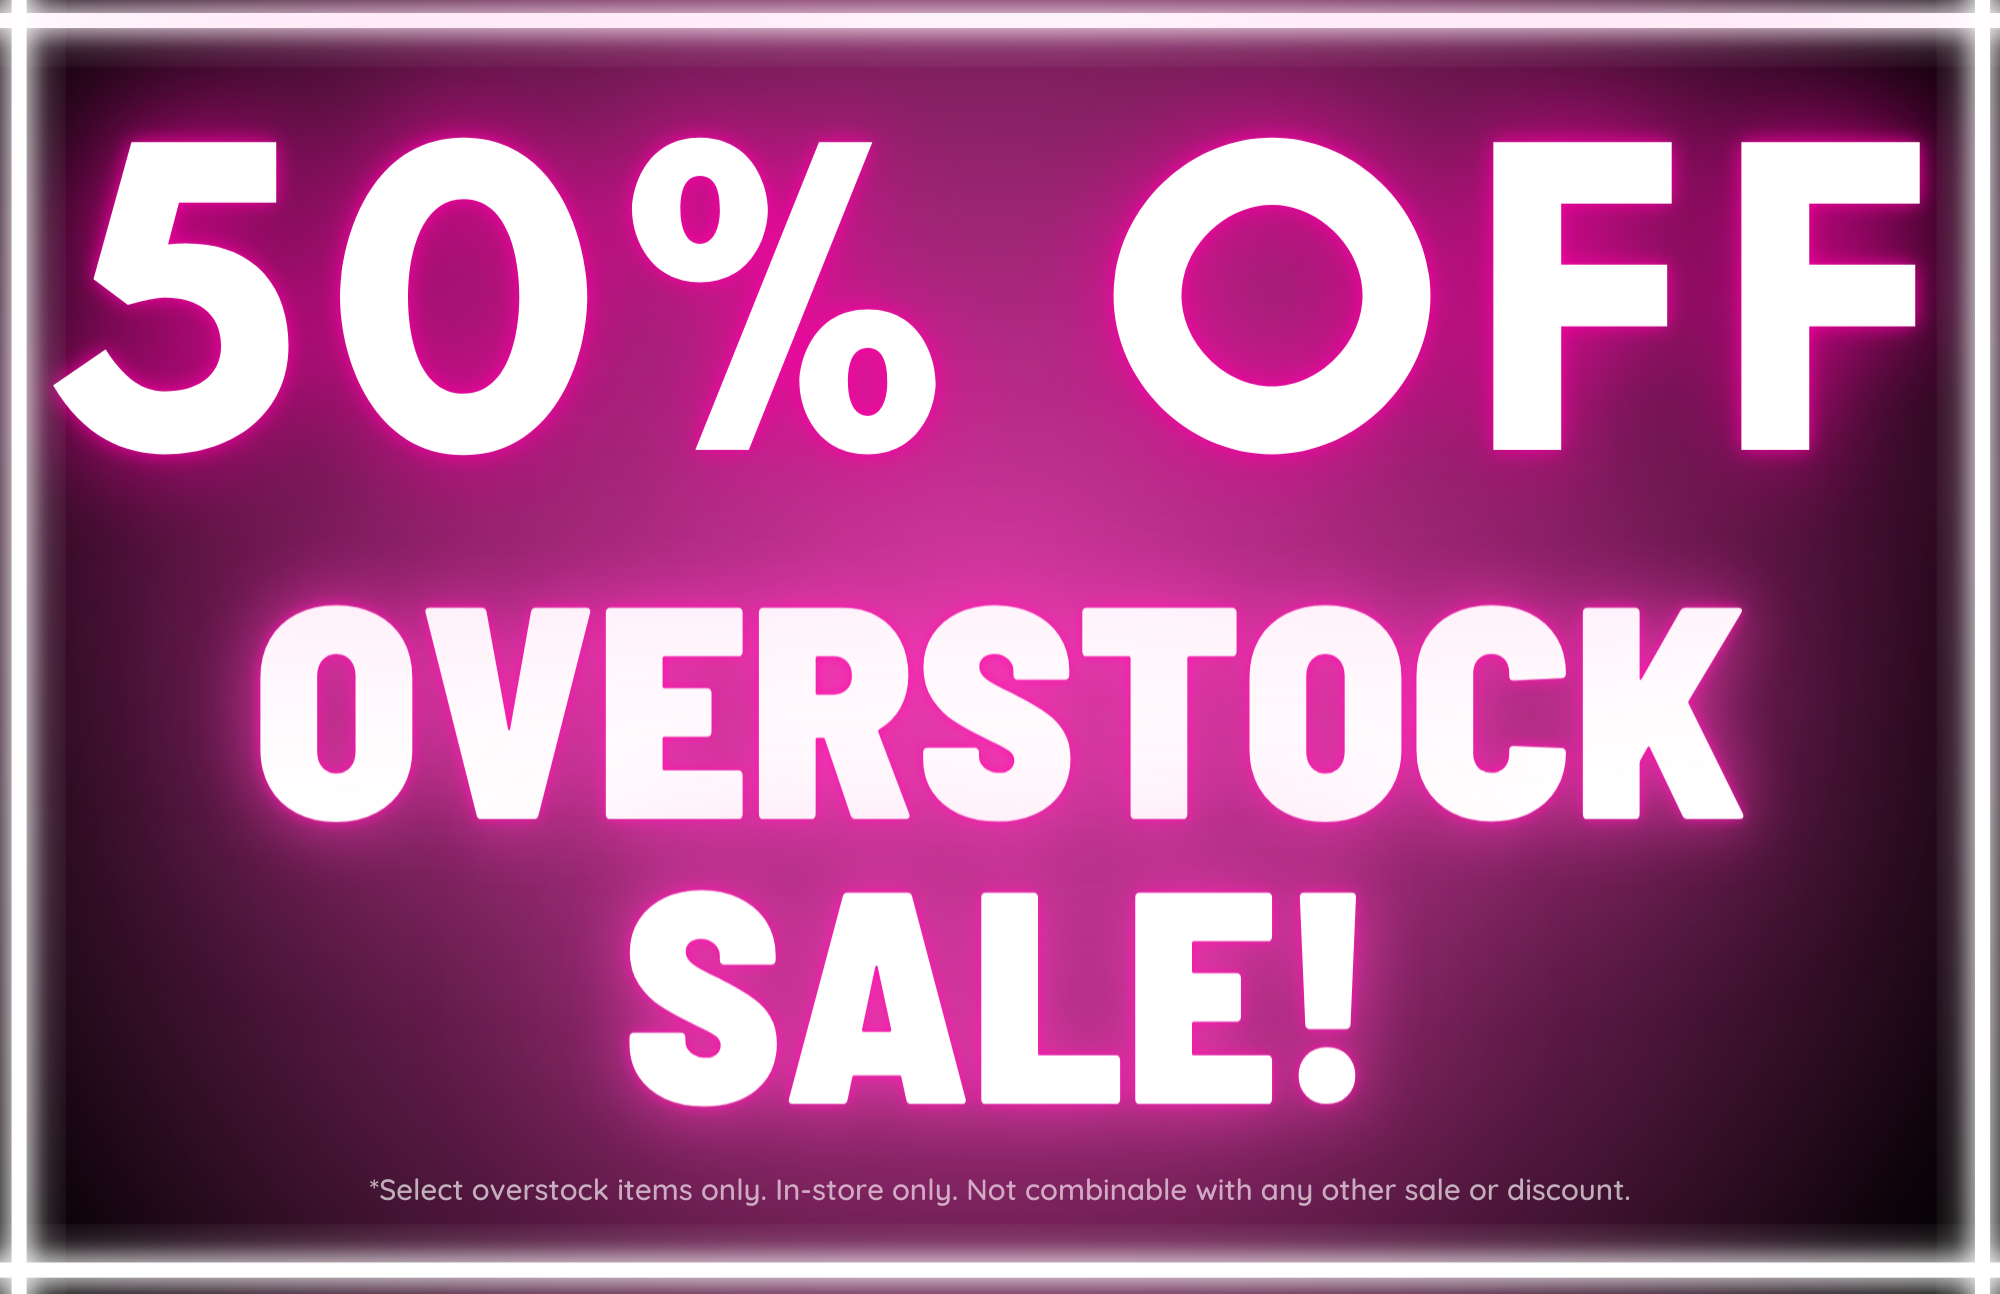 Overstock Items Sale